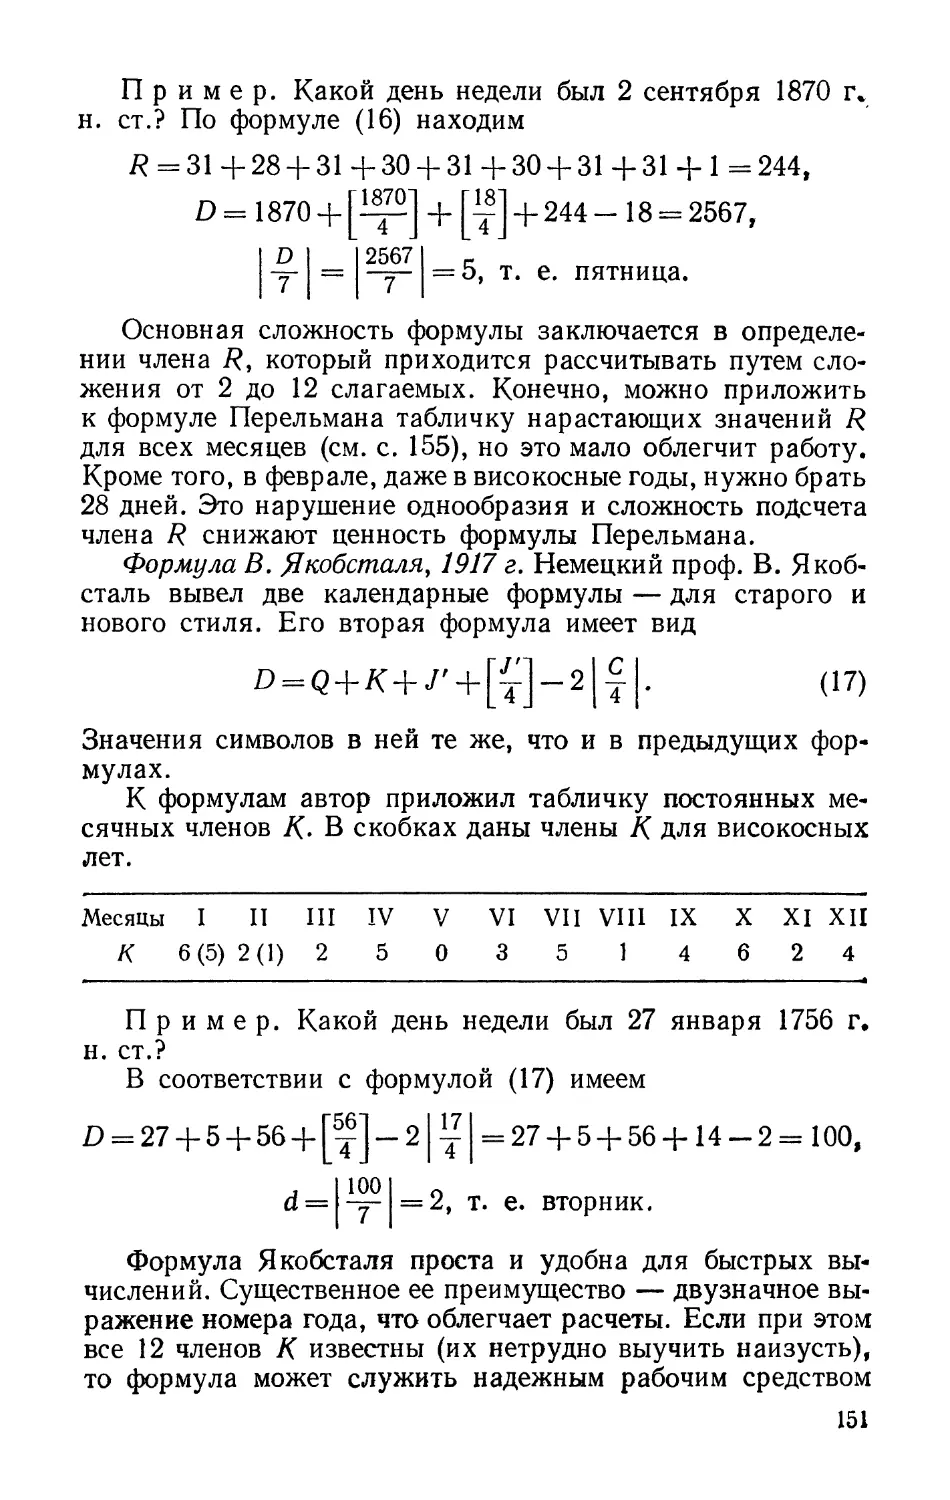 Формула В. Якобсталя, 1917 г.